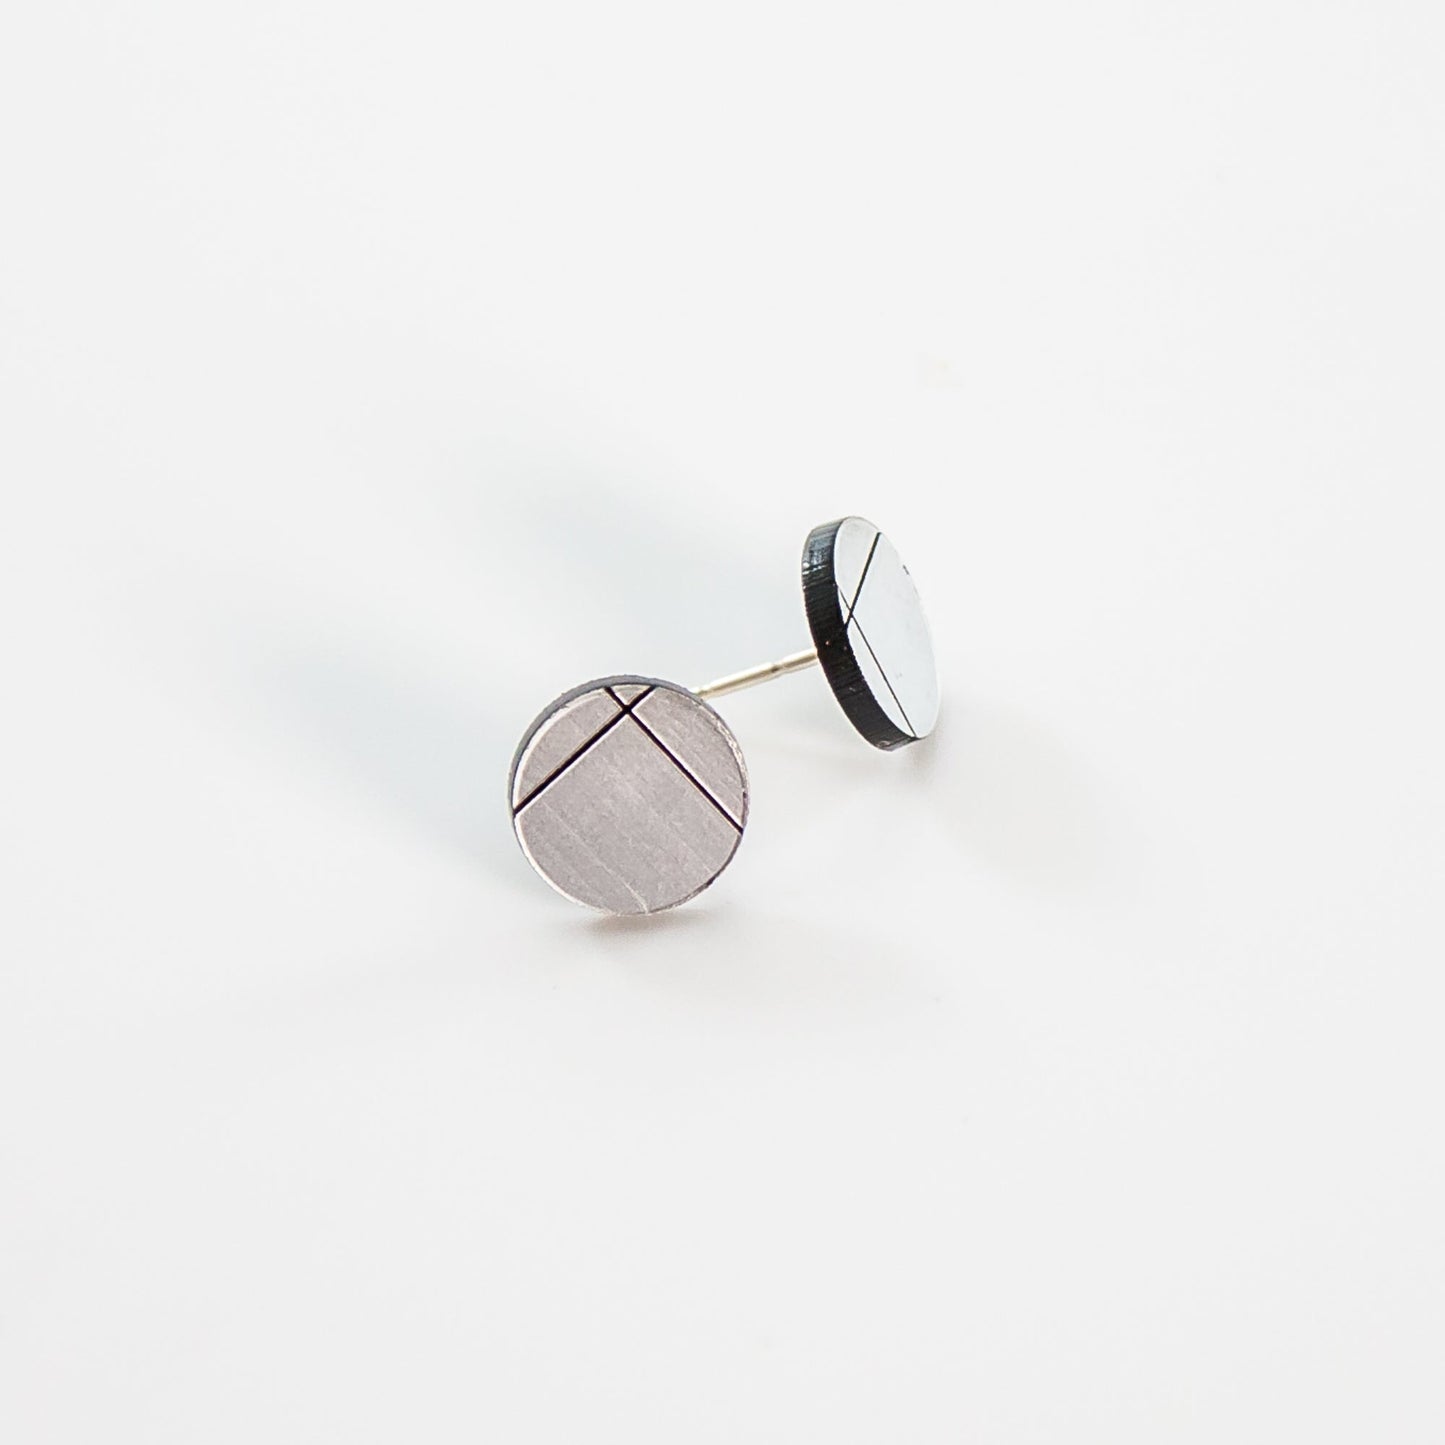 Laser Cut Geometric Earrings - Silver Acrylic GeoStud Circles - by LeeMo Designs in Bend, Oregon